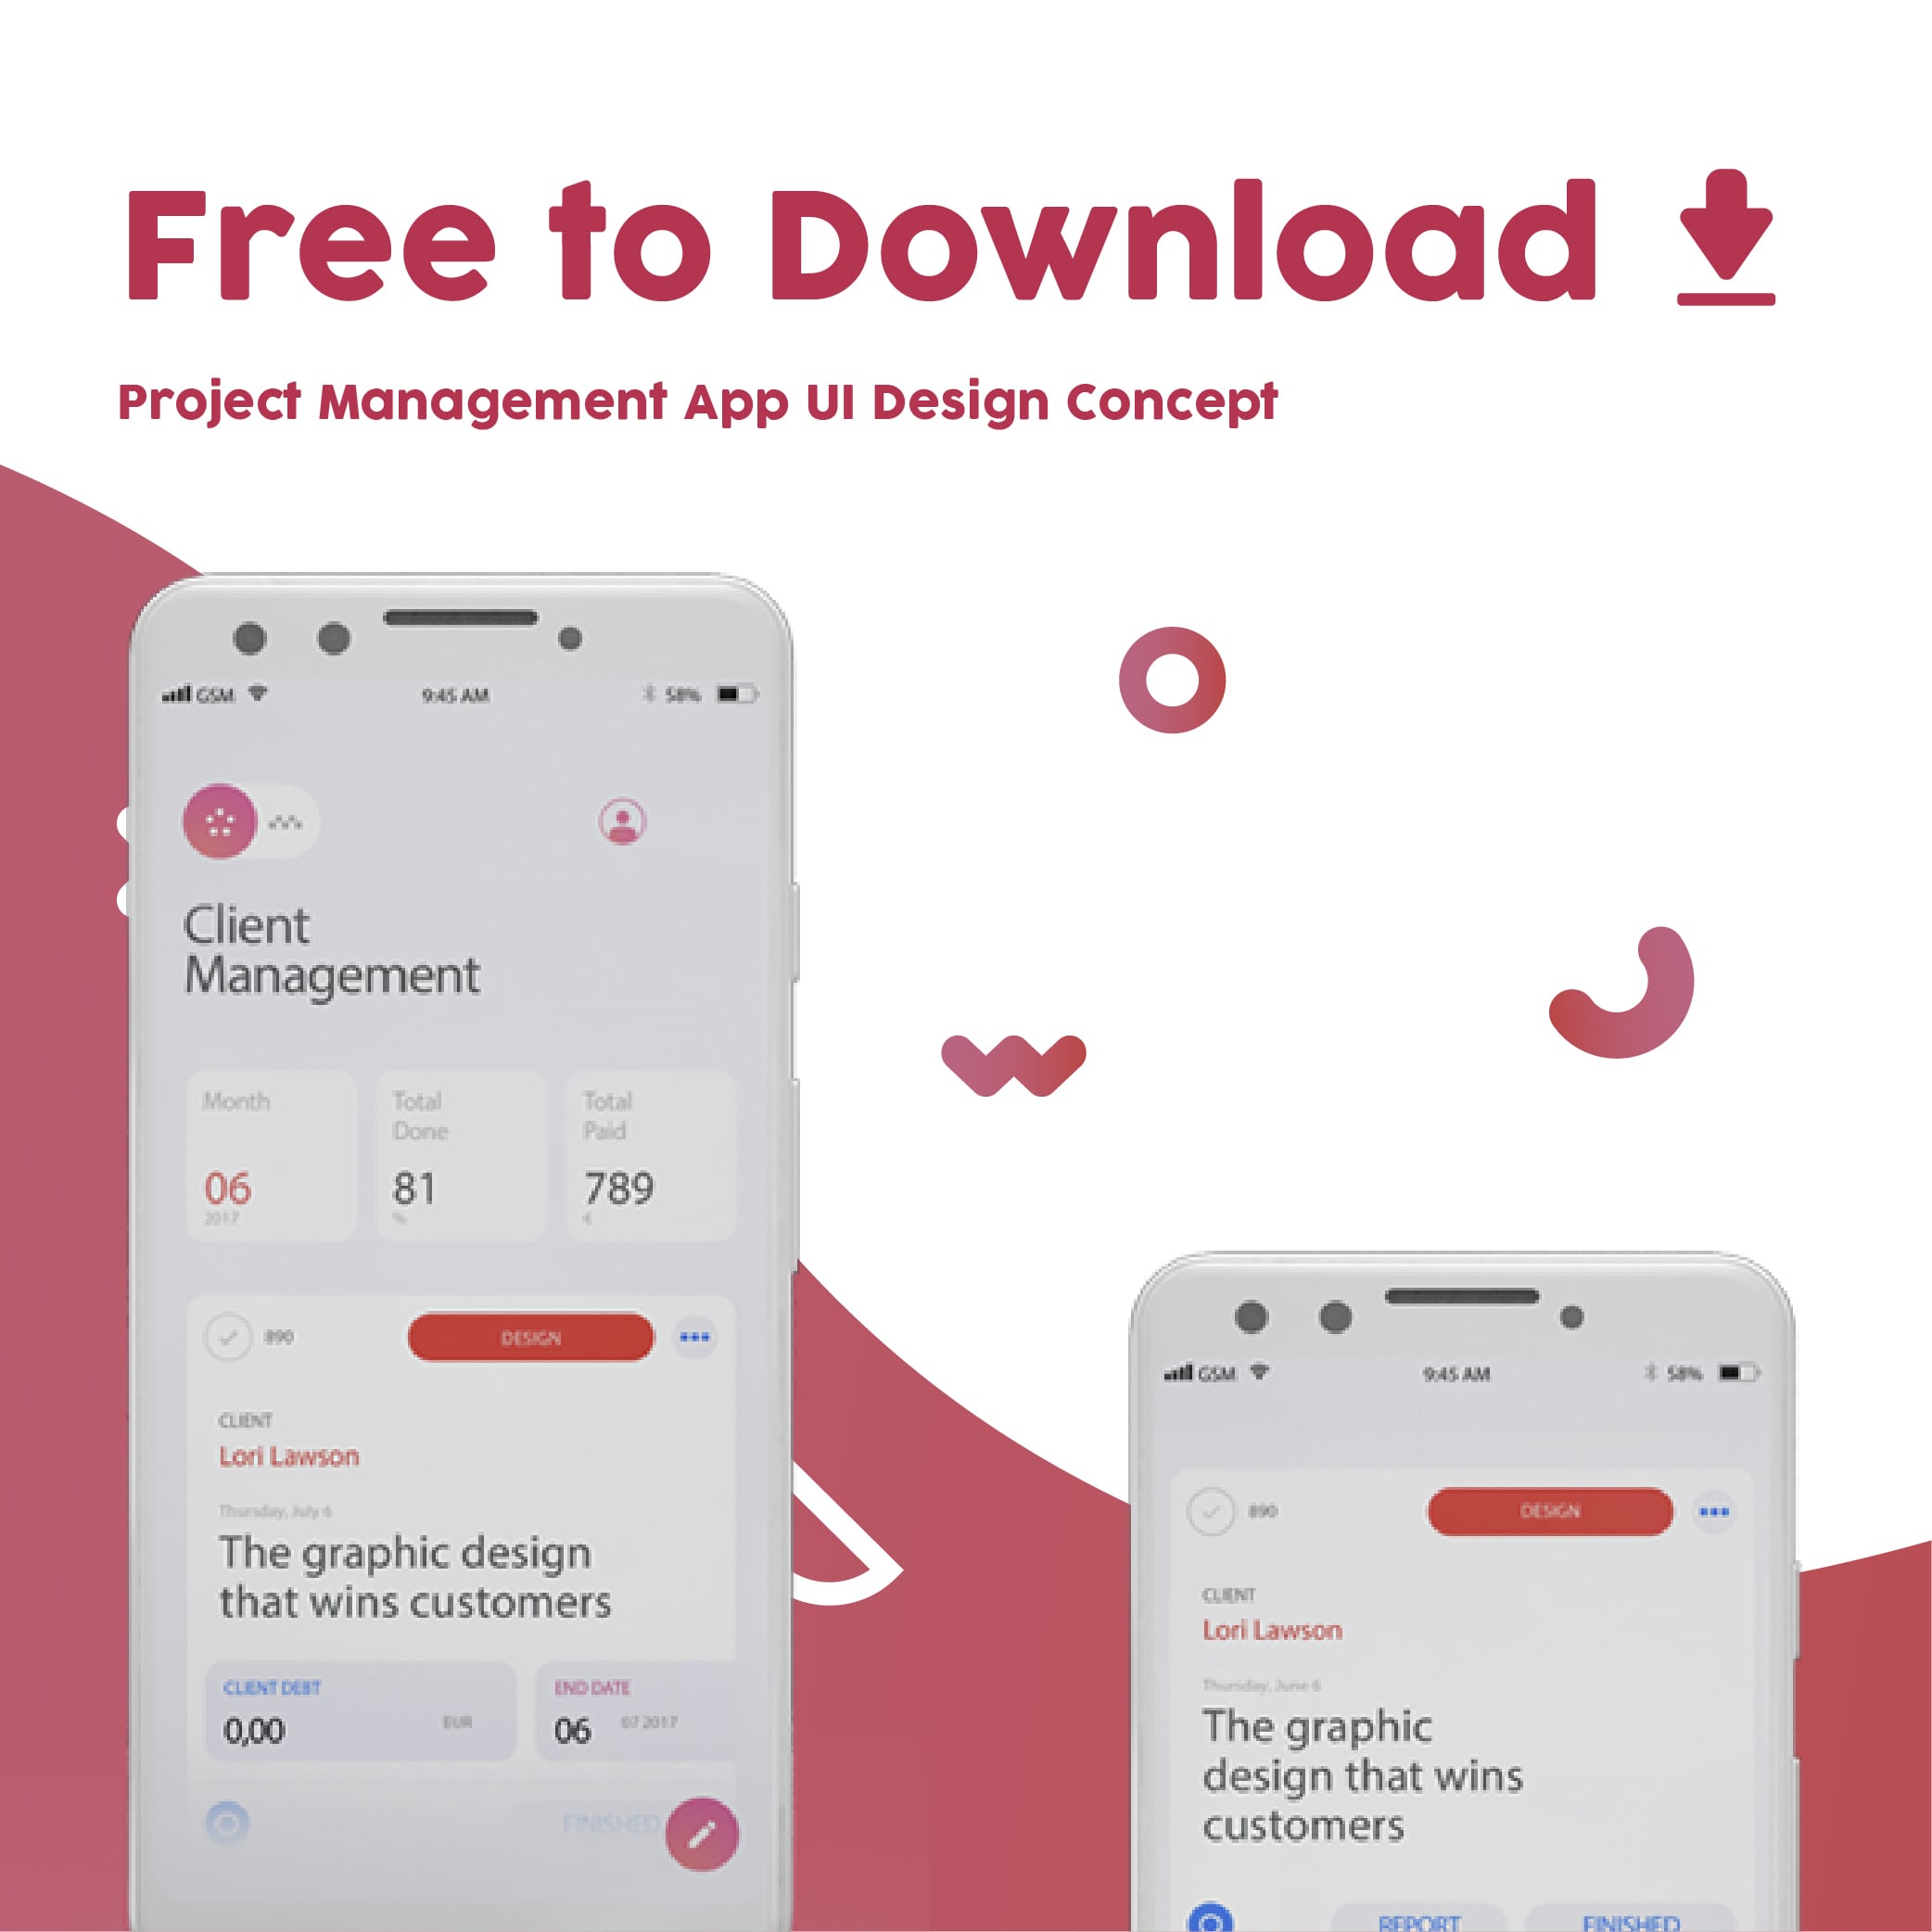 Free to Download Project Management App UI Design Concept